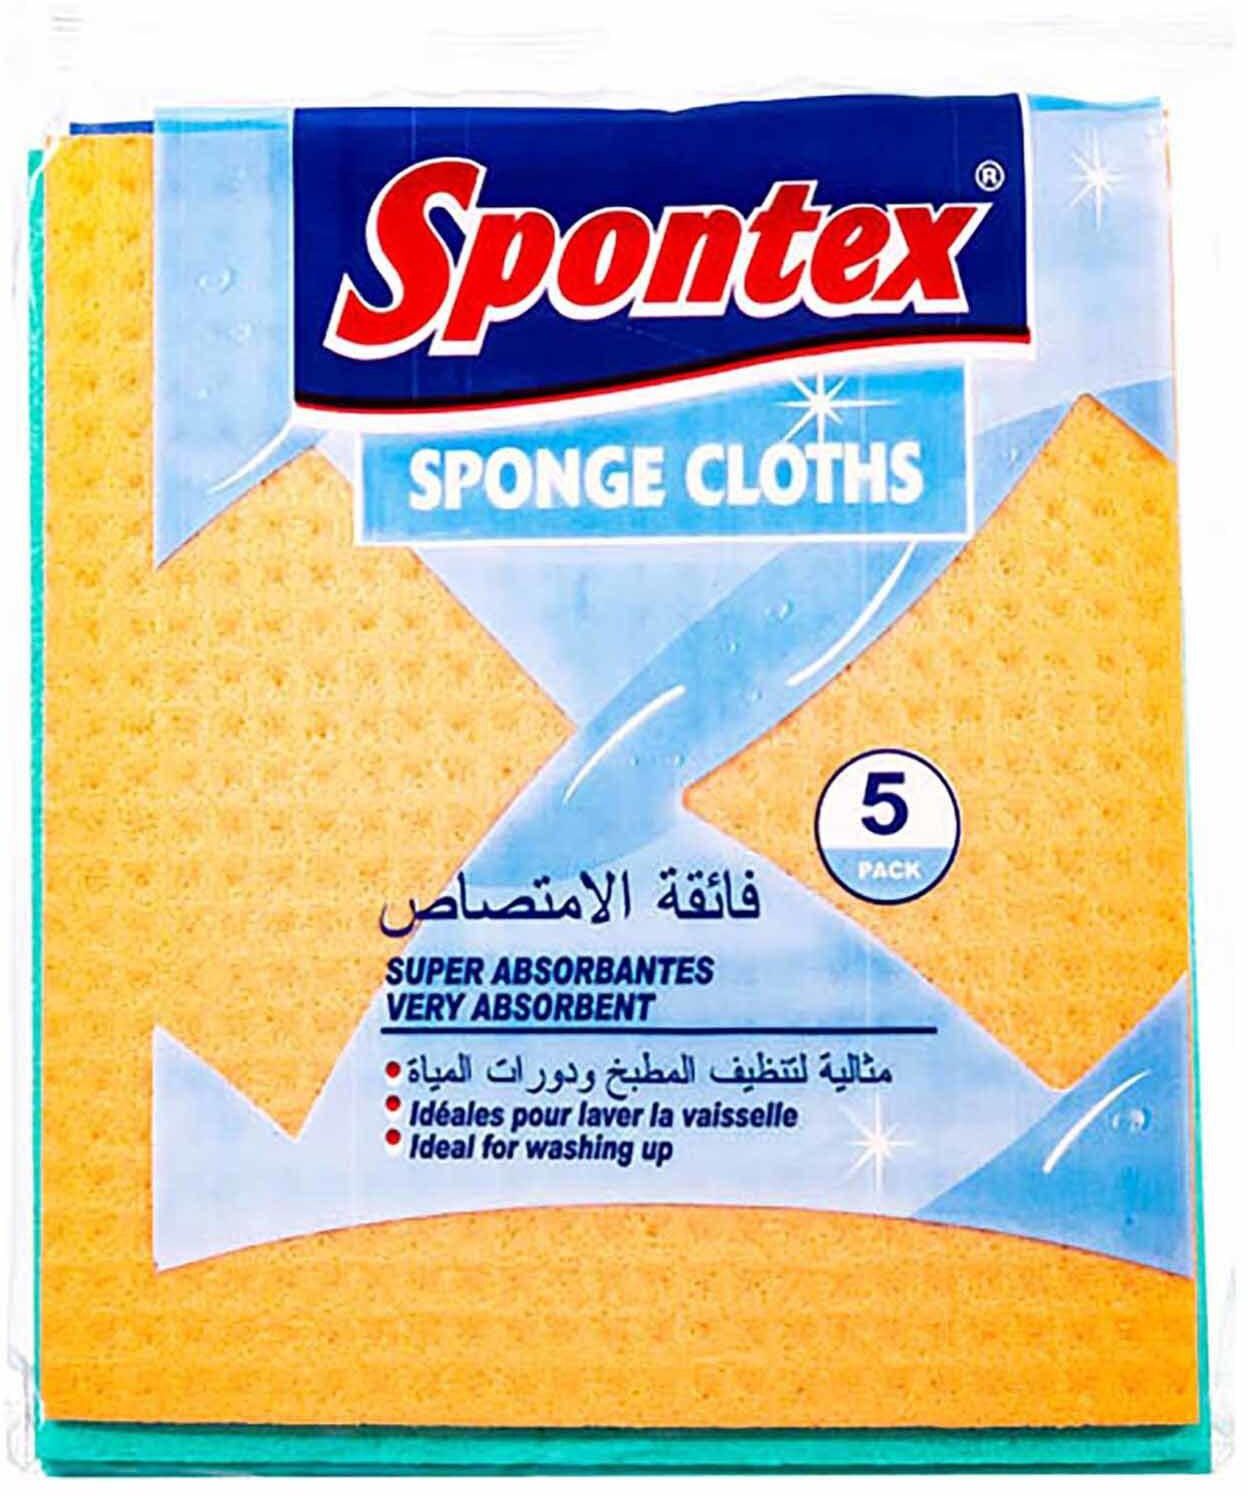 Spontex Sponge Cloth - Pack of 5